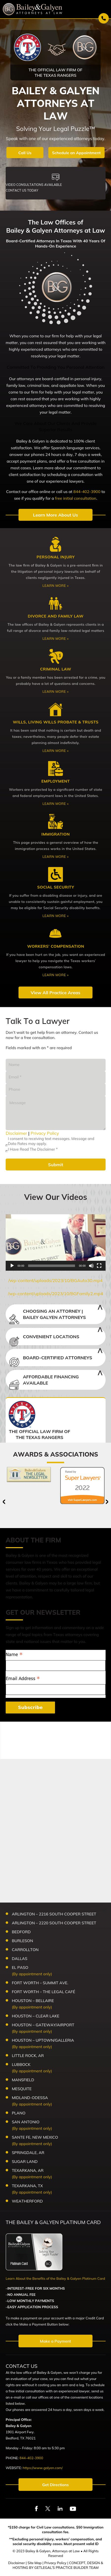 Bailey & Galyen, Attorneys at Law - Dallas TX Lawyers